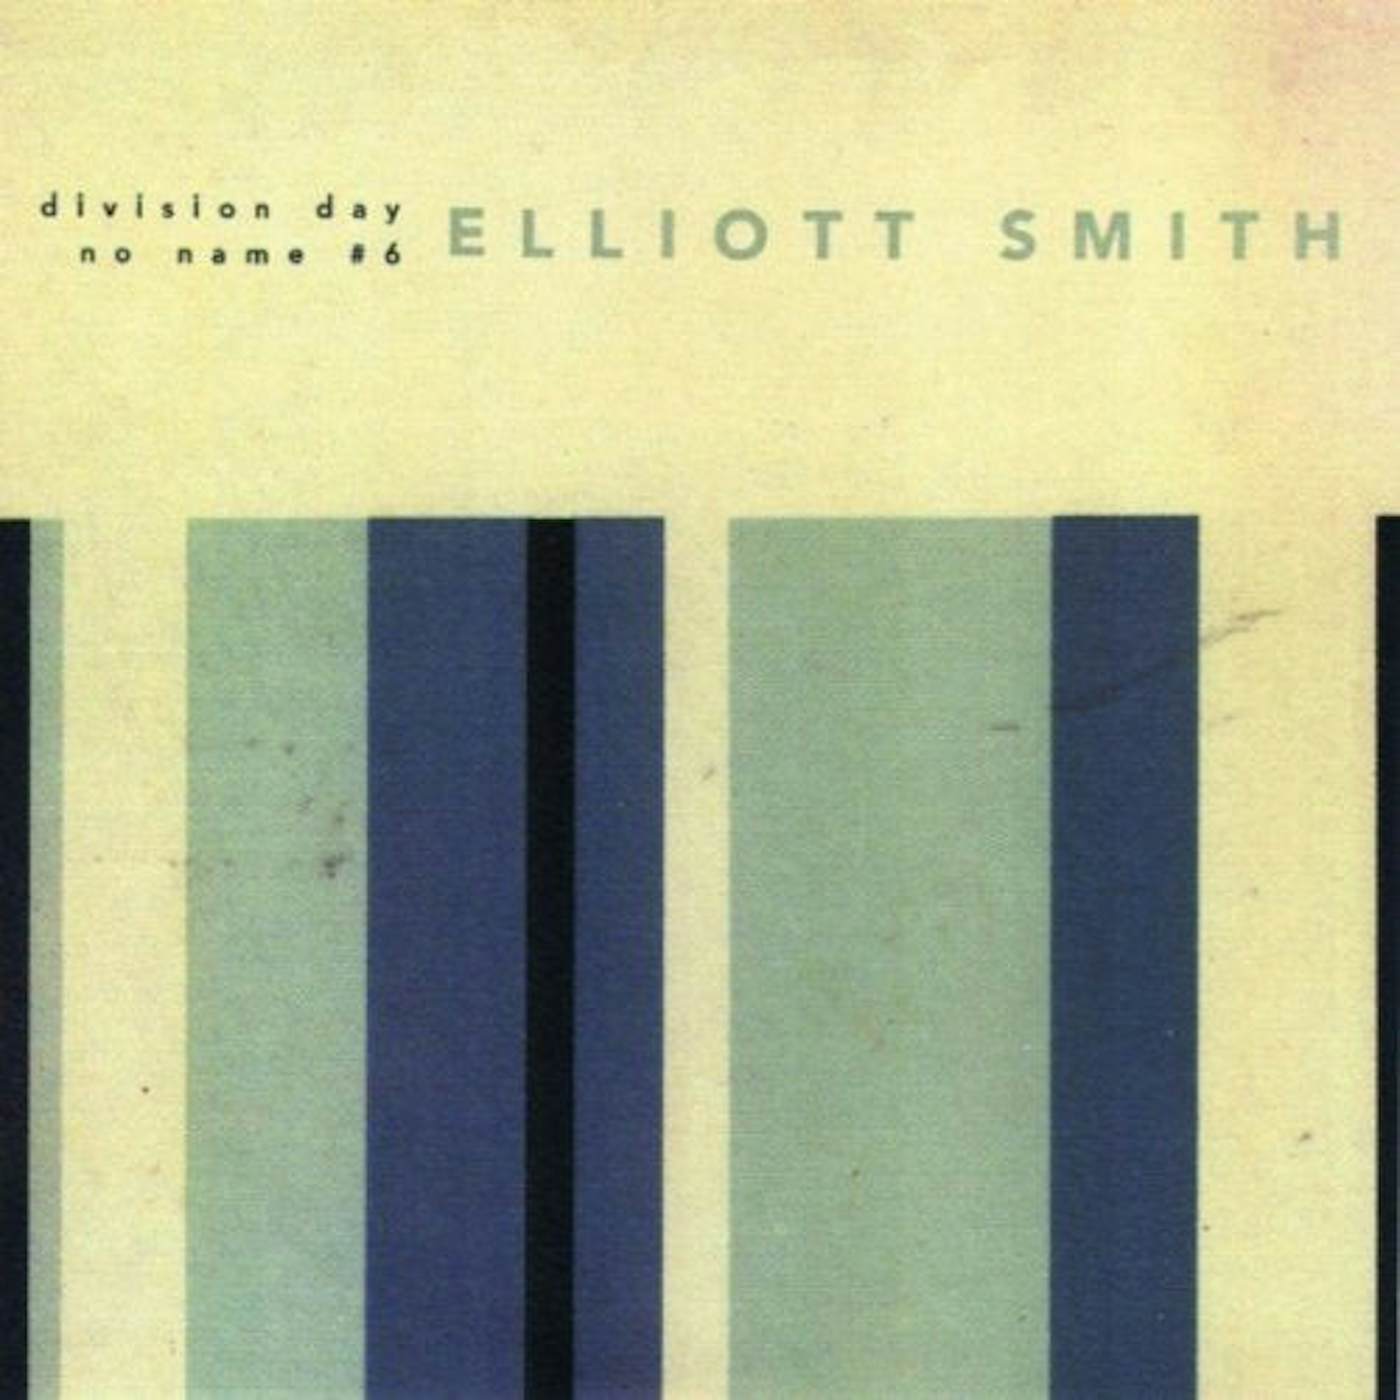 Elliott Smith DIVISION DAY (HALF DOUBLE MINT HALF ELECTRIC BLUE) Vinyl Record